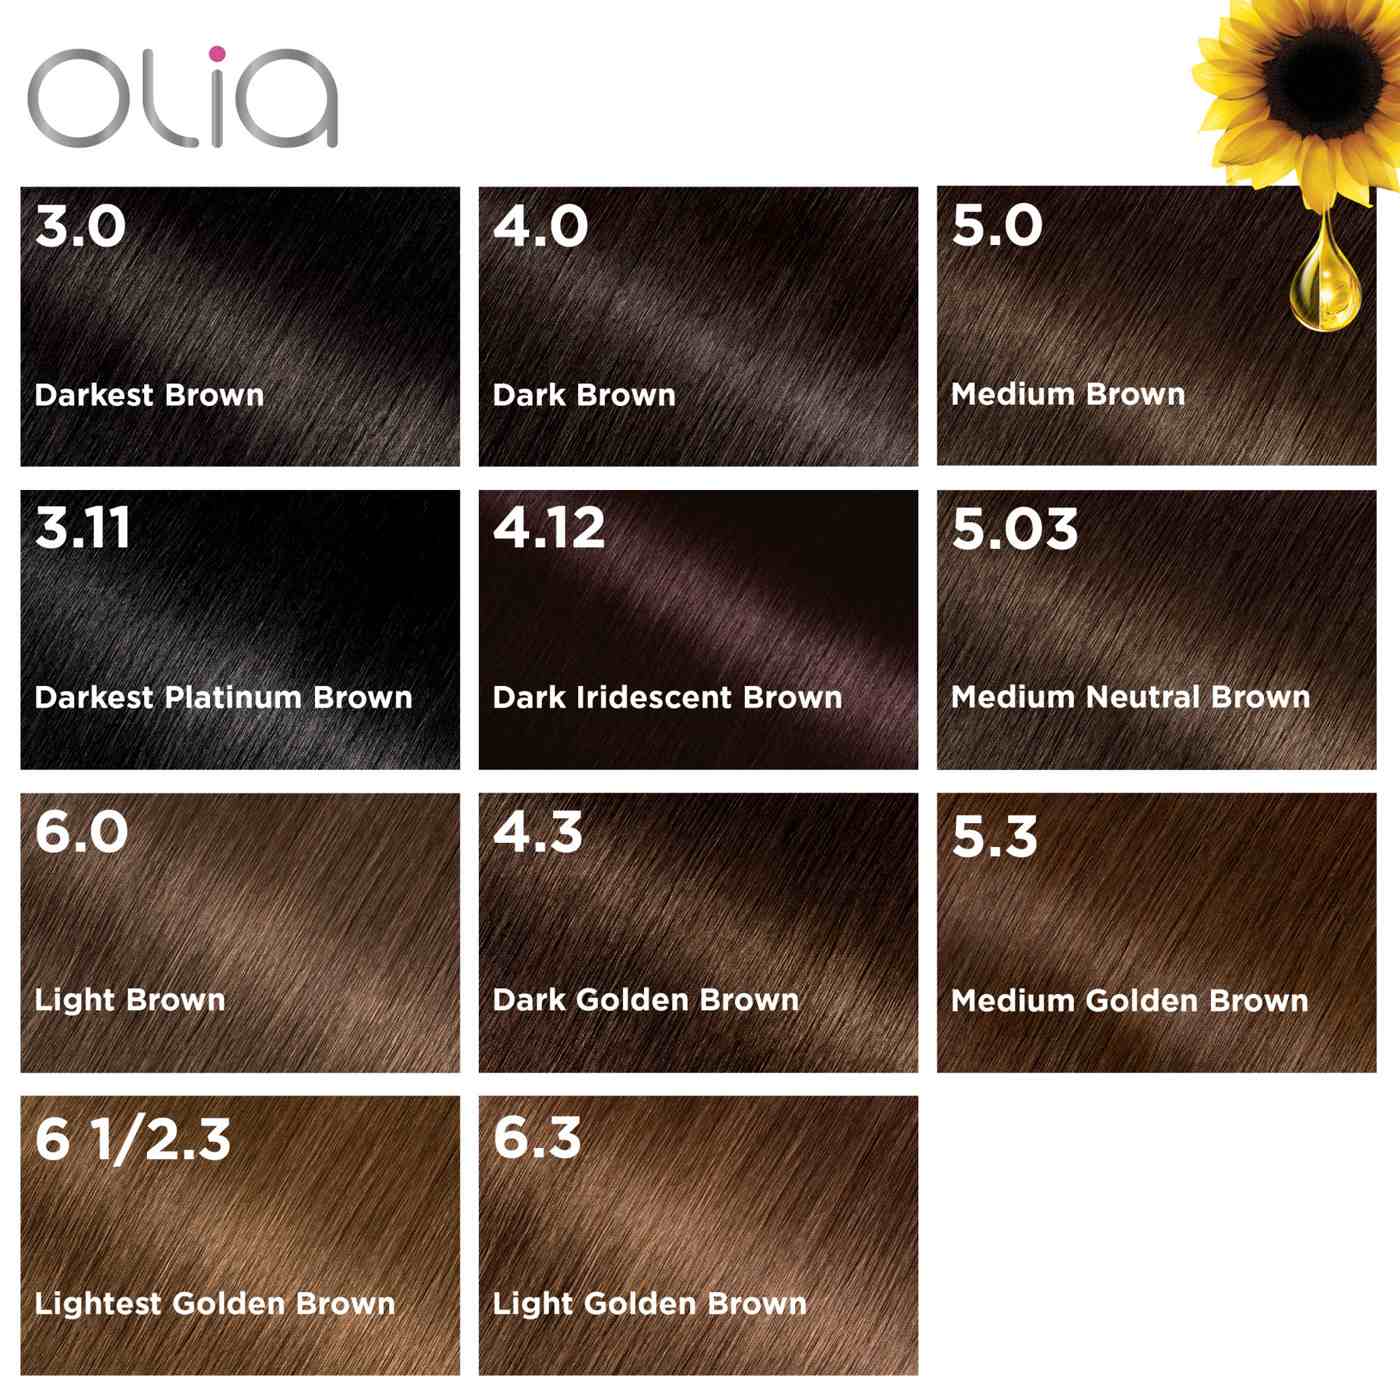 Garnier Olia Oil Powered Ammonia Free Permanent Hair Color 5.0 Medium Brown; image 10 of 13